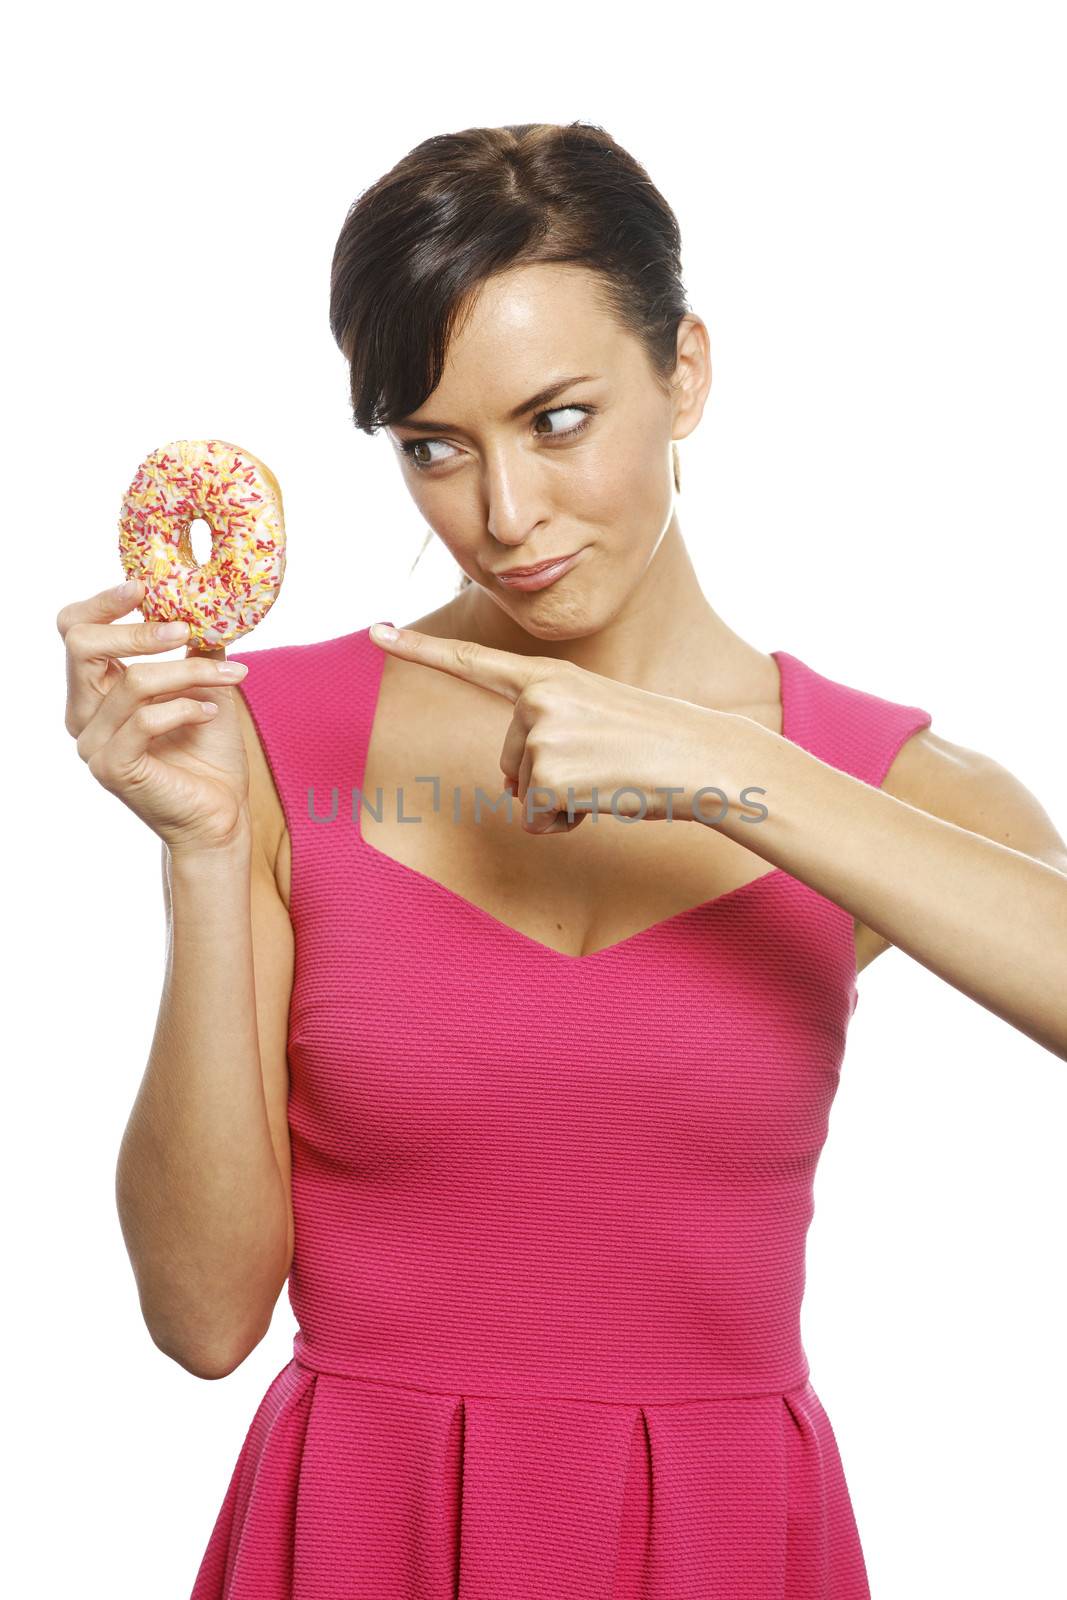 Woman with doughnut by studiofi